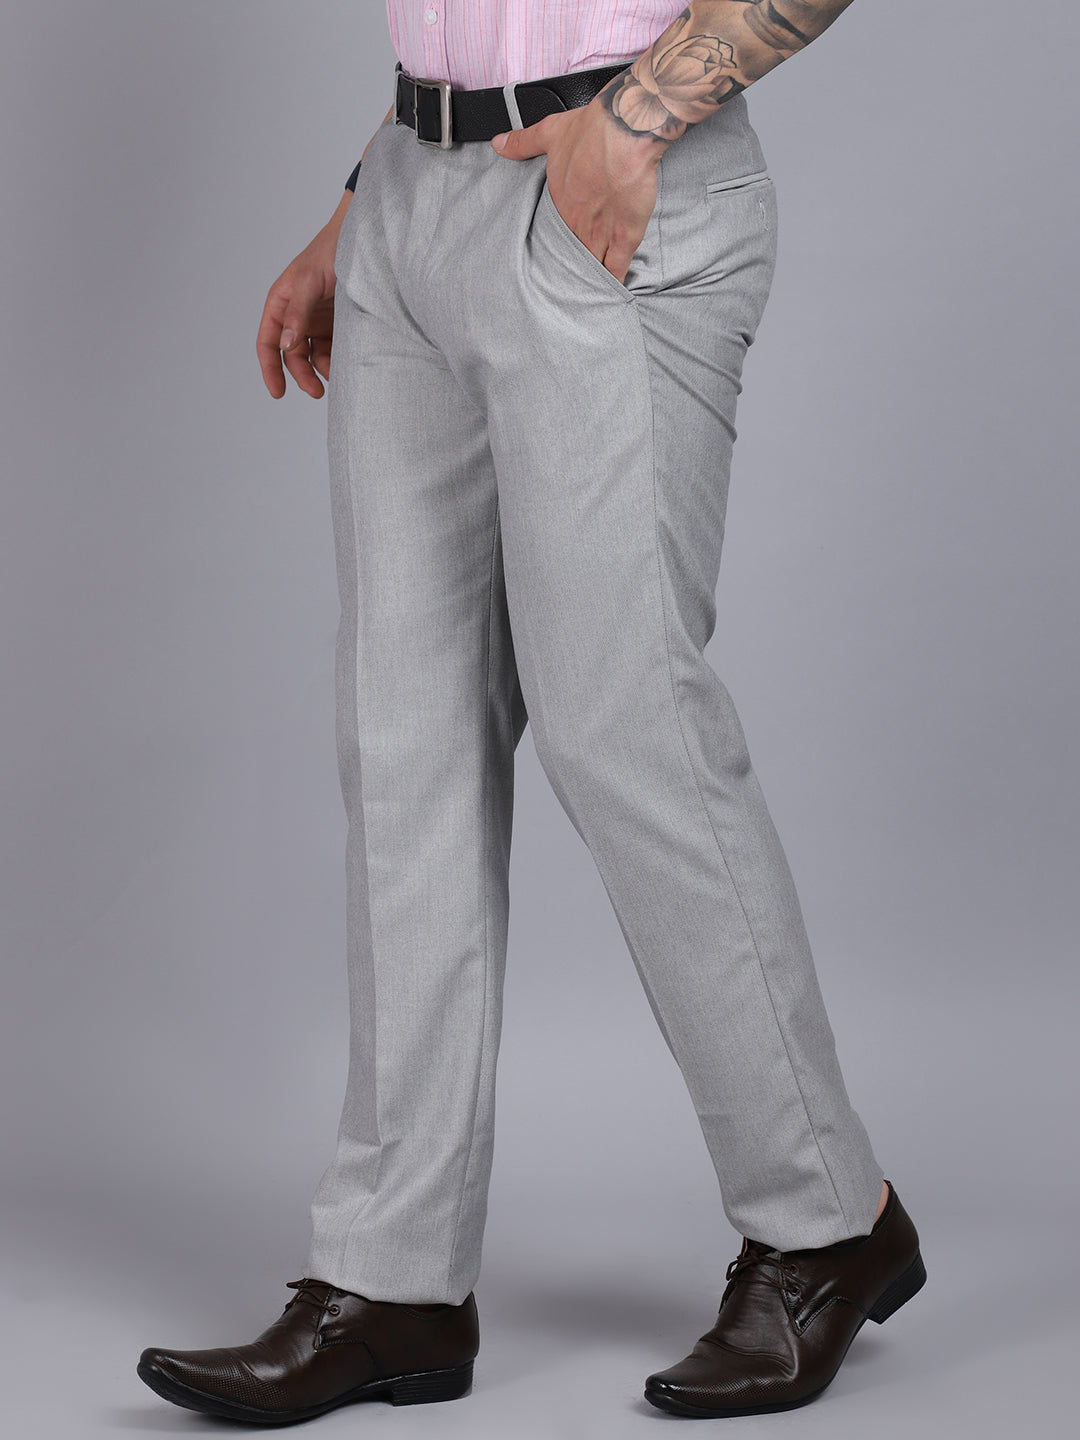 Buy Light Grey Trouser for Female Online @ Best Prices in India | UNIFORM  BUCKET